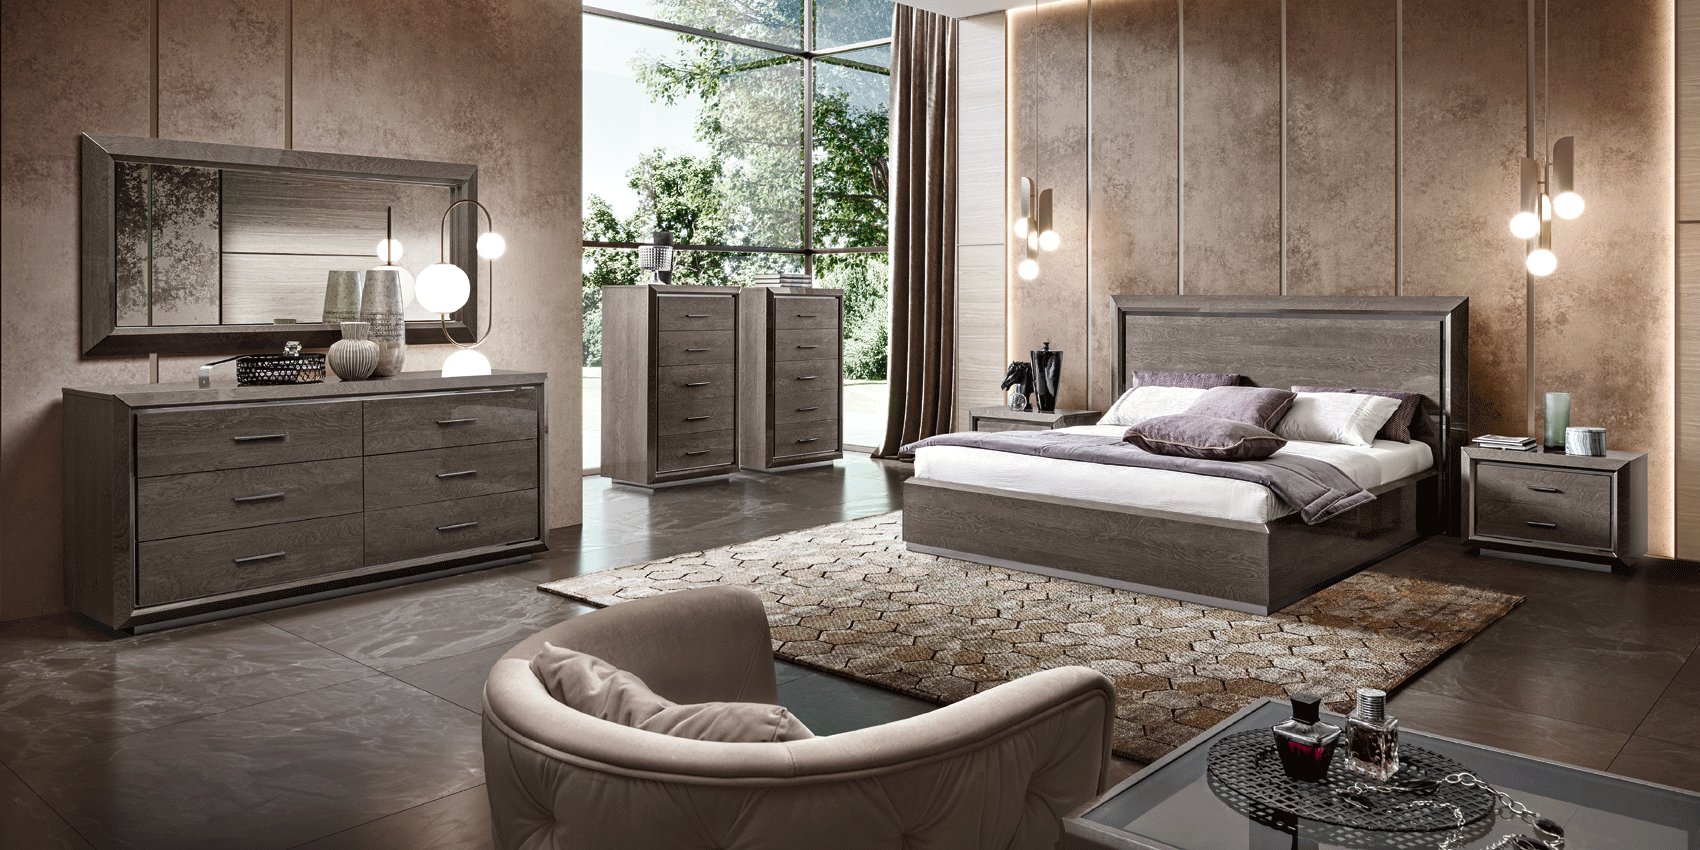 Bedroom Furniture Mirrors Elite Night "LEGNO" Additional Items